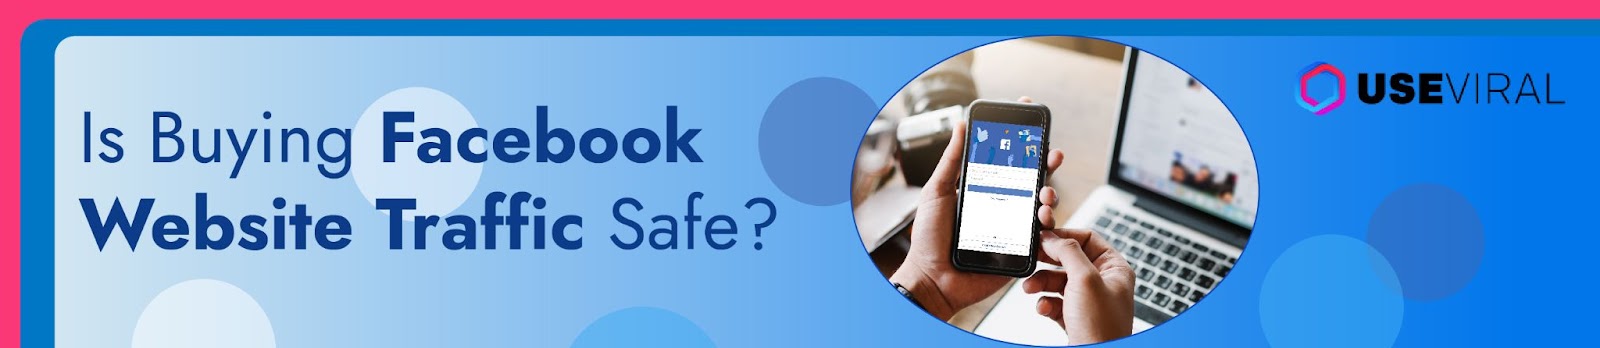 Is Buying Facebook Website Traffic Safe?